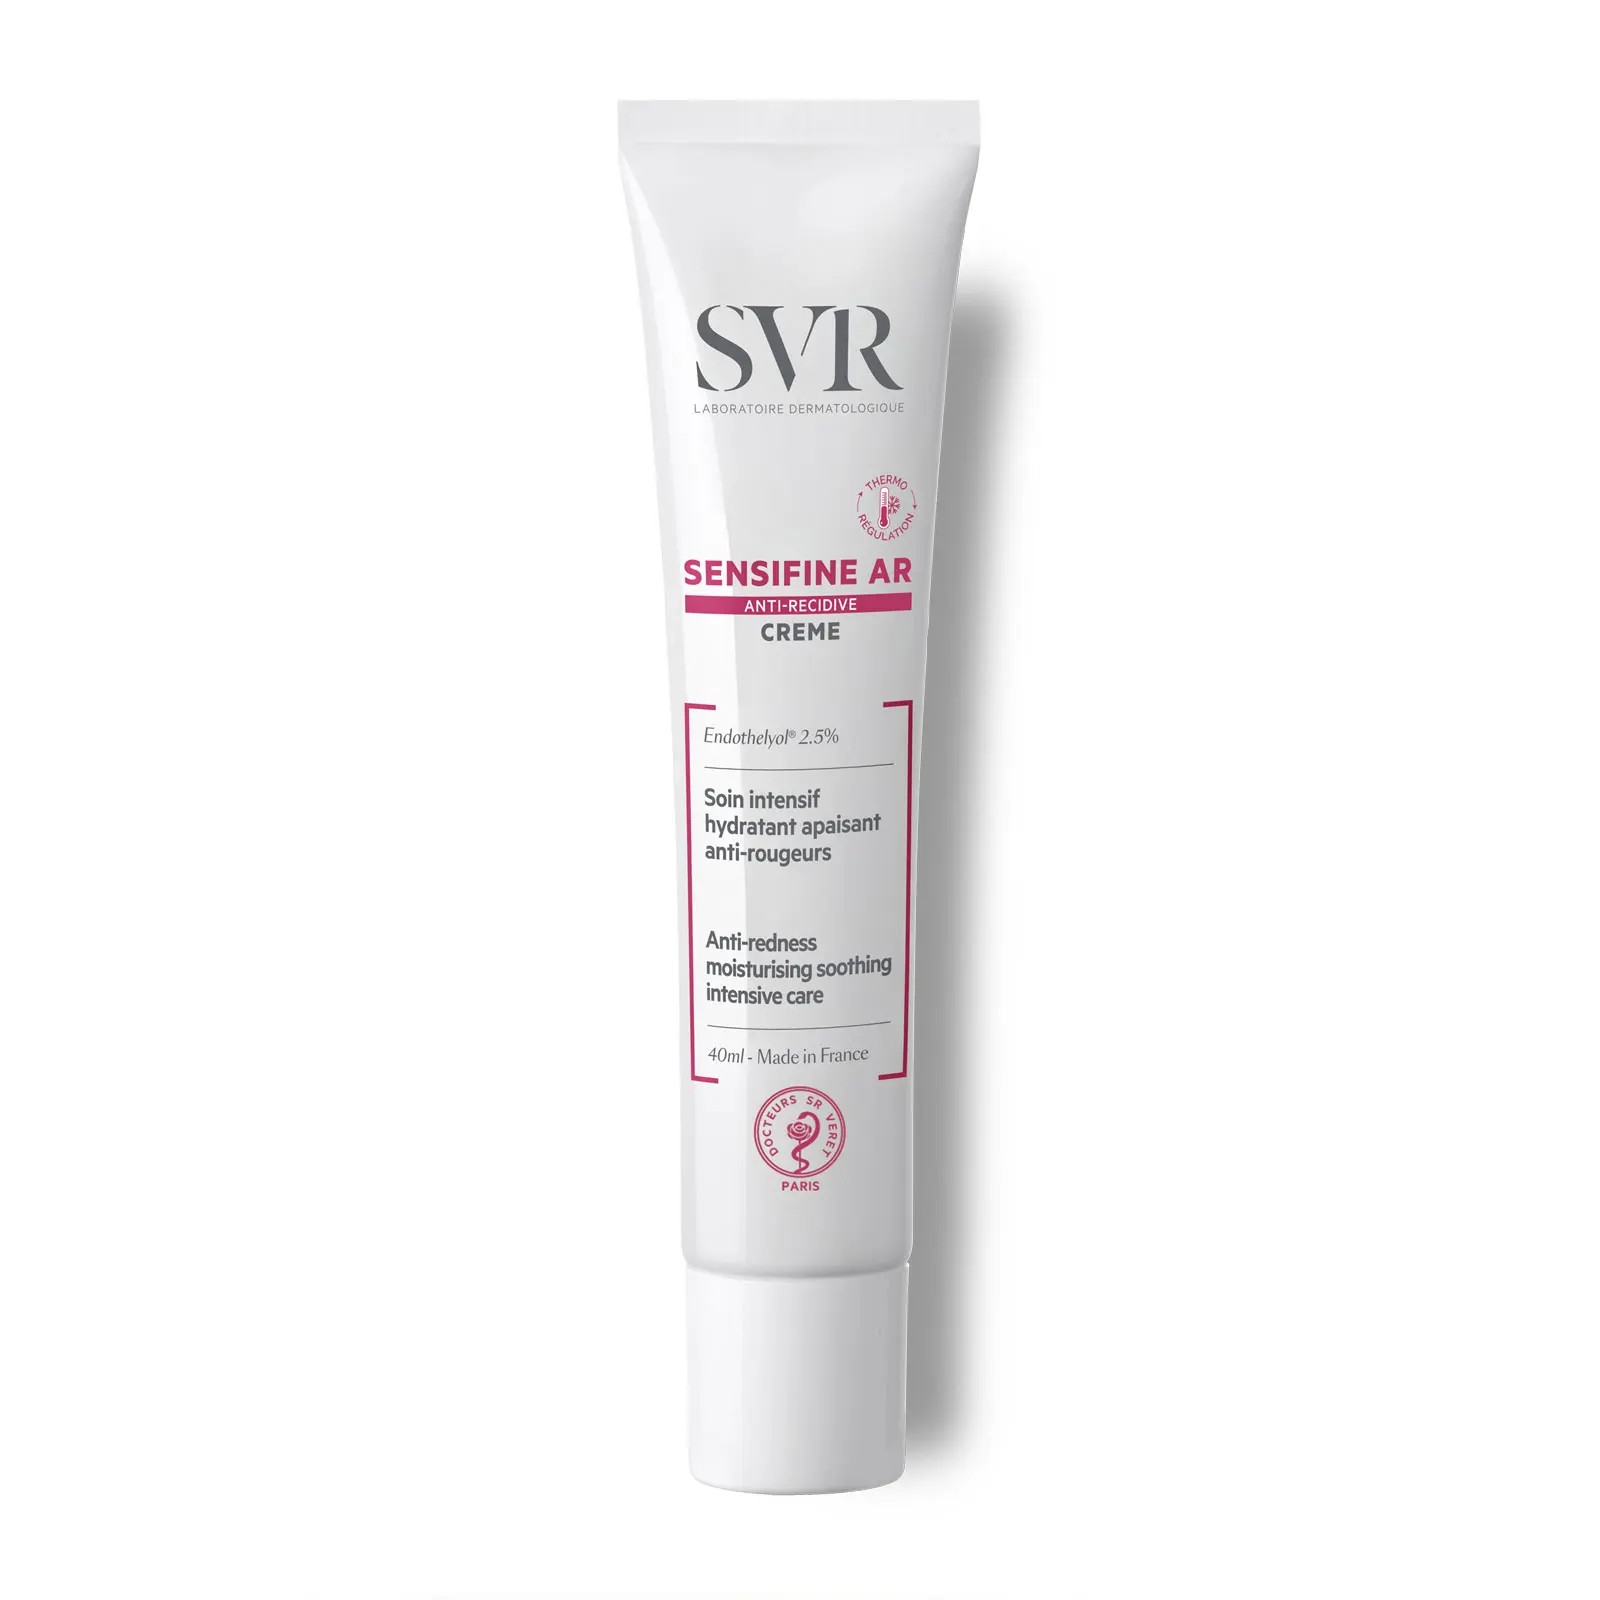 SVR Sensifine AR Cream, 40ml.